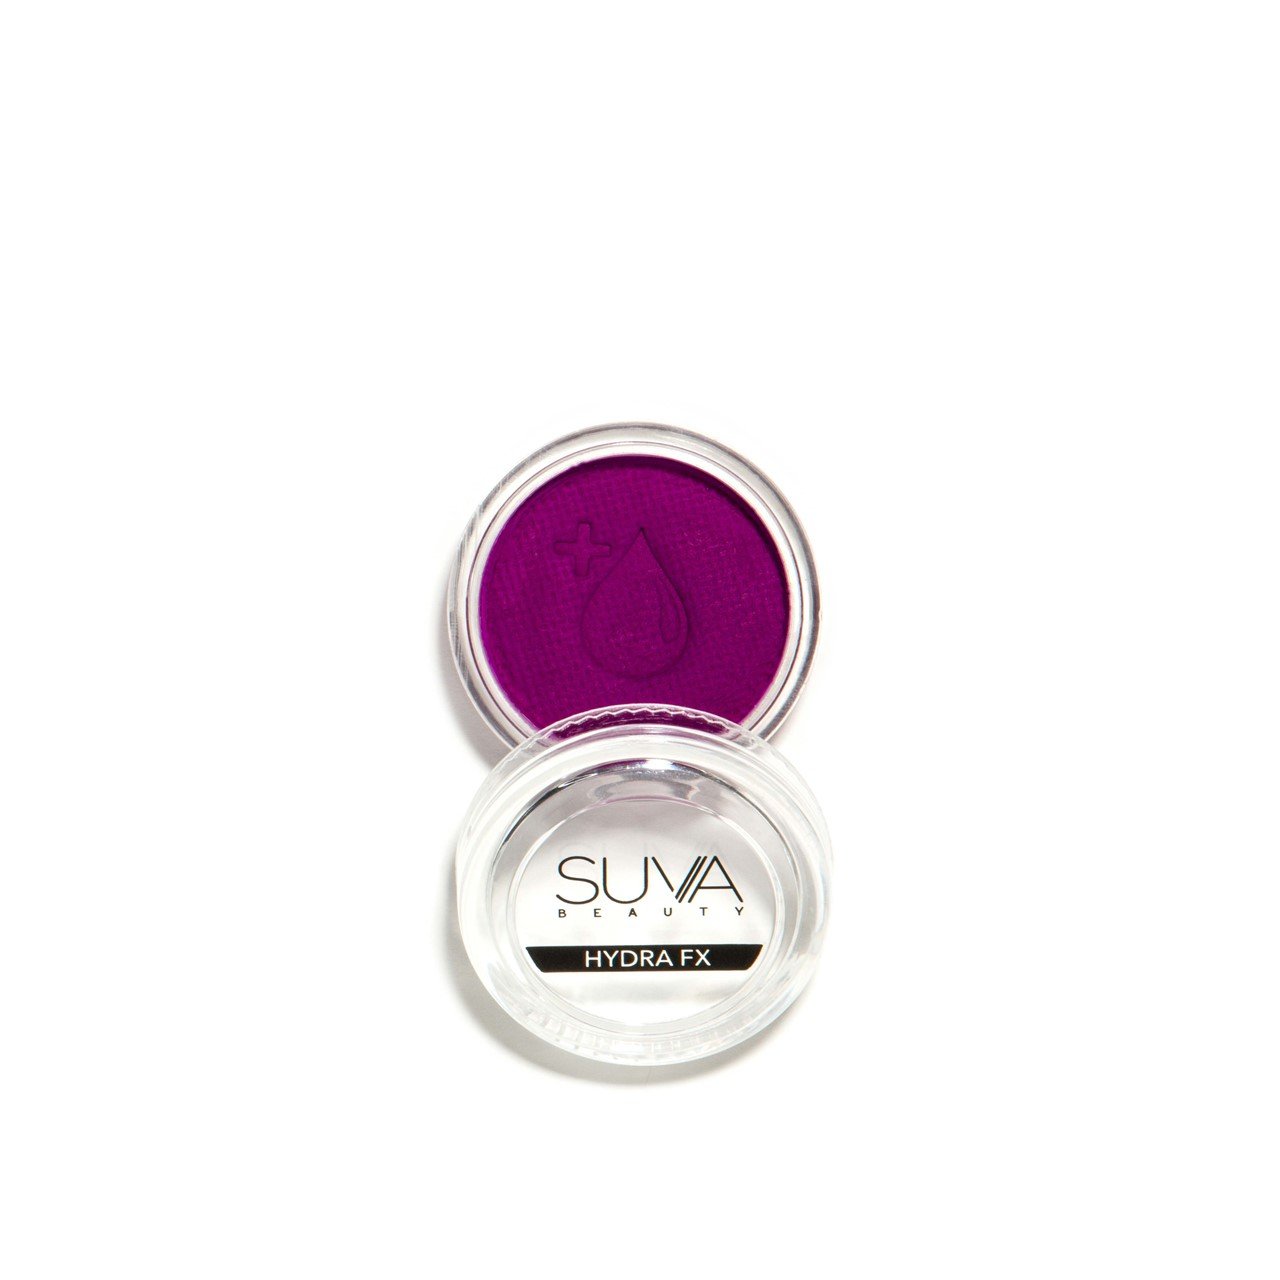 SUVA Beauty Hydra FX Grape Soda UV Body Art 10g (0.35oz)